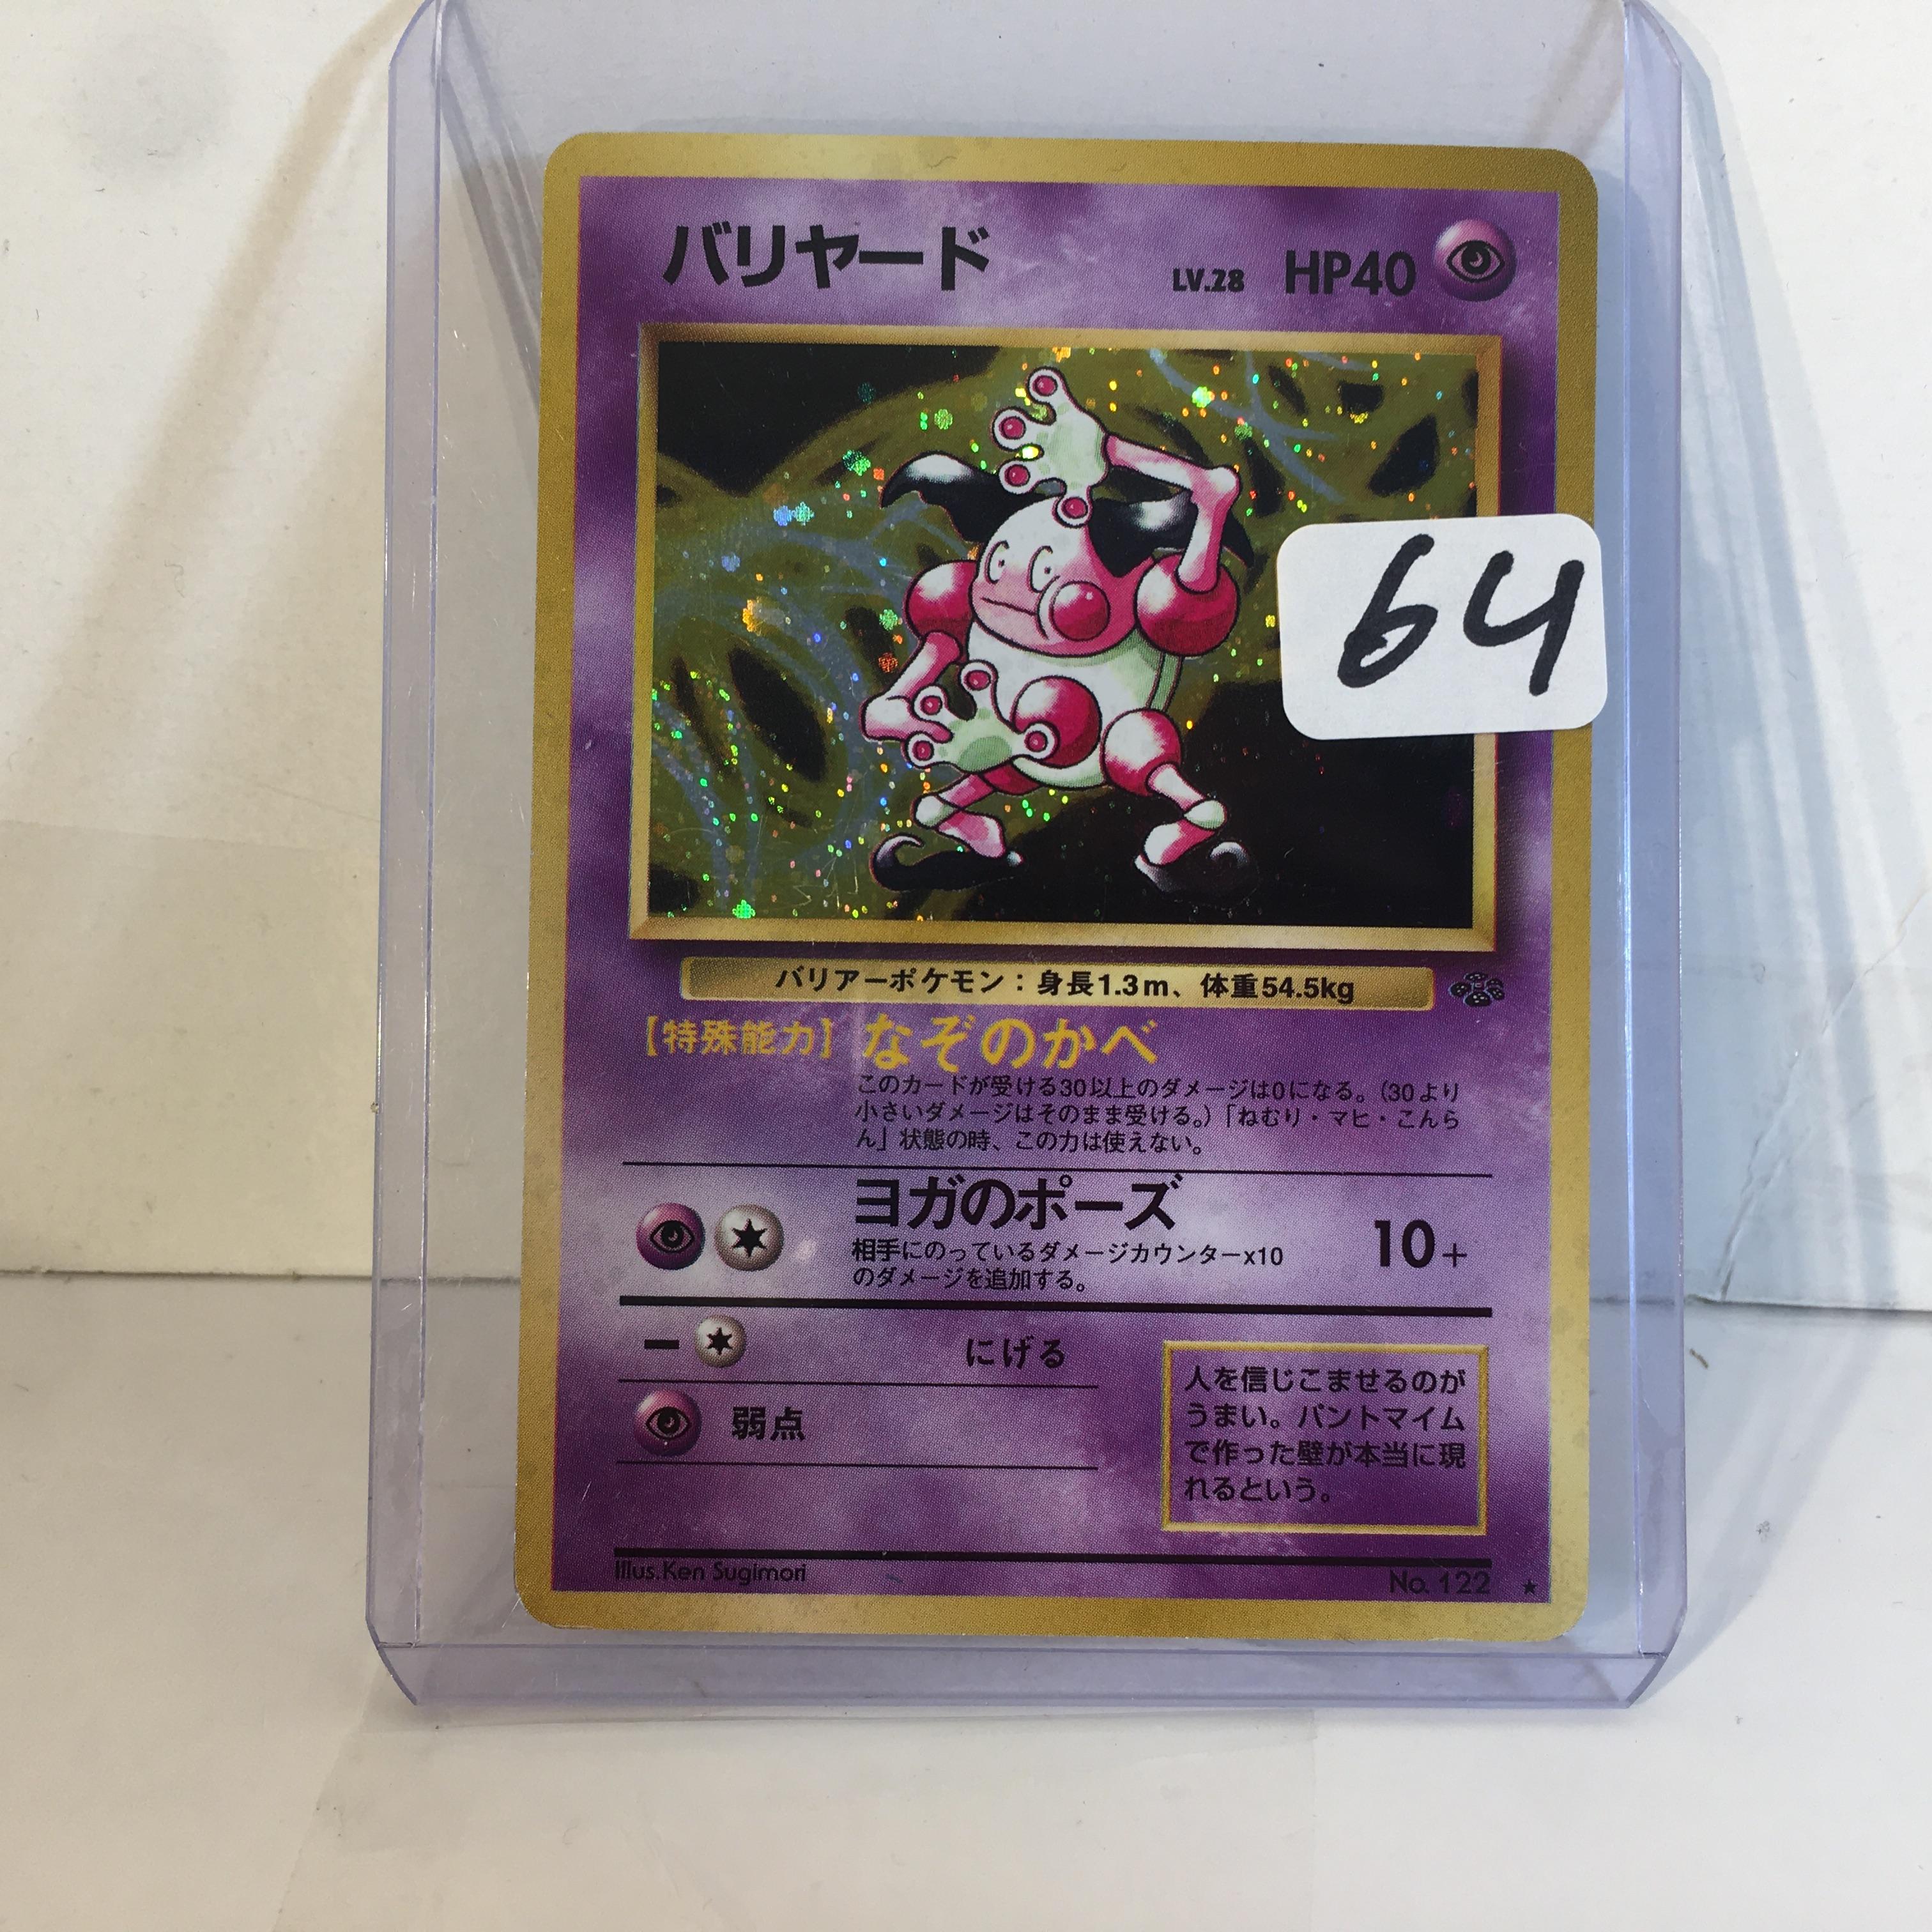 Collector Modern 1996 Nintendo Pokemon Pocket Monsters HP40 Trading Game Card No.122